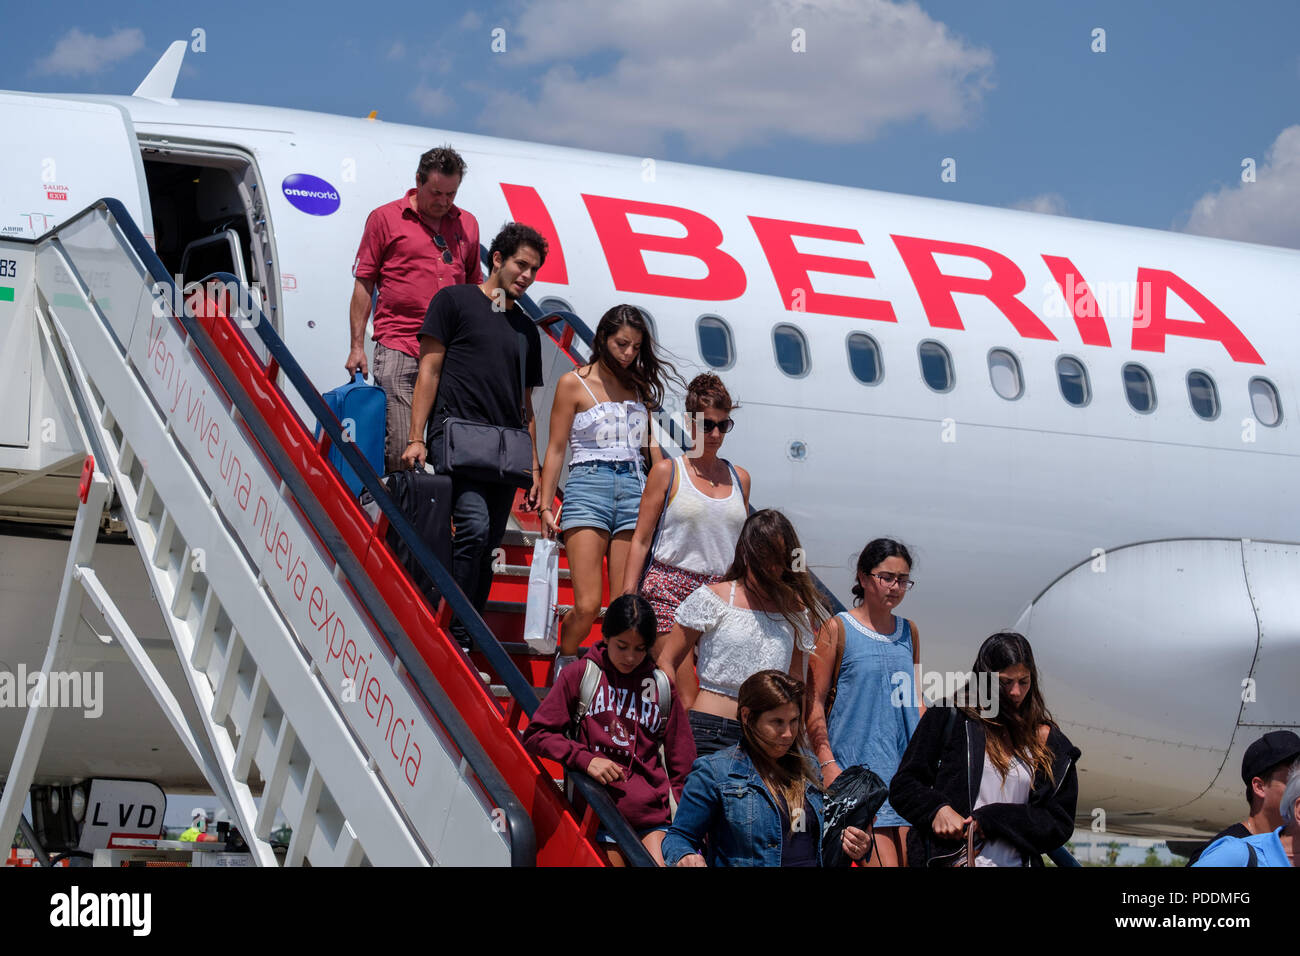 Passengers disembarking an Iberia airplane Stock Photo